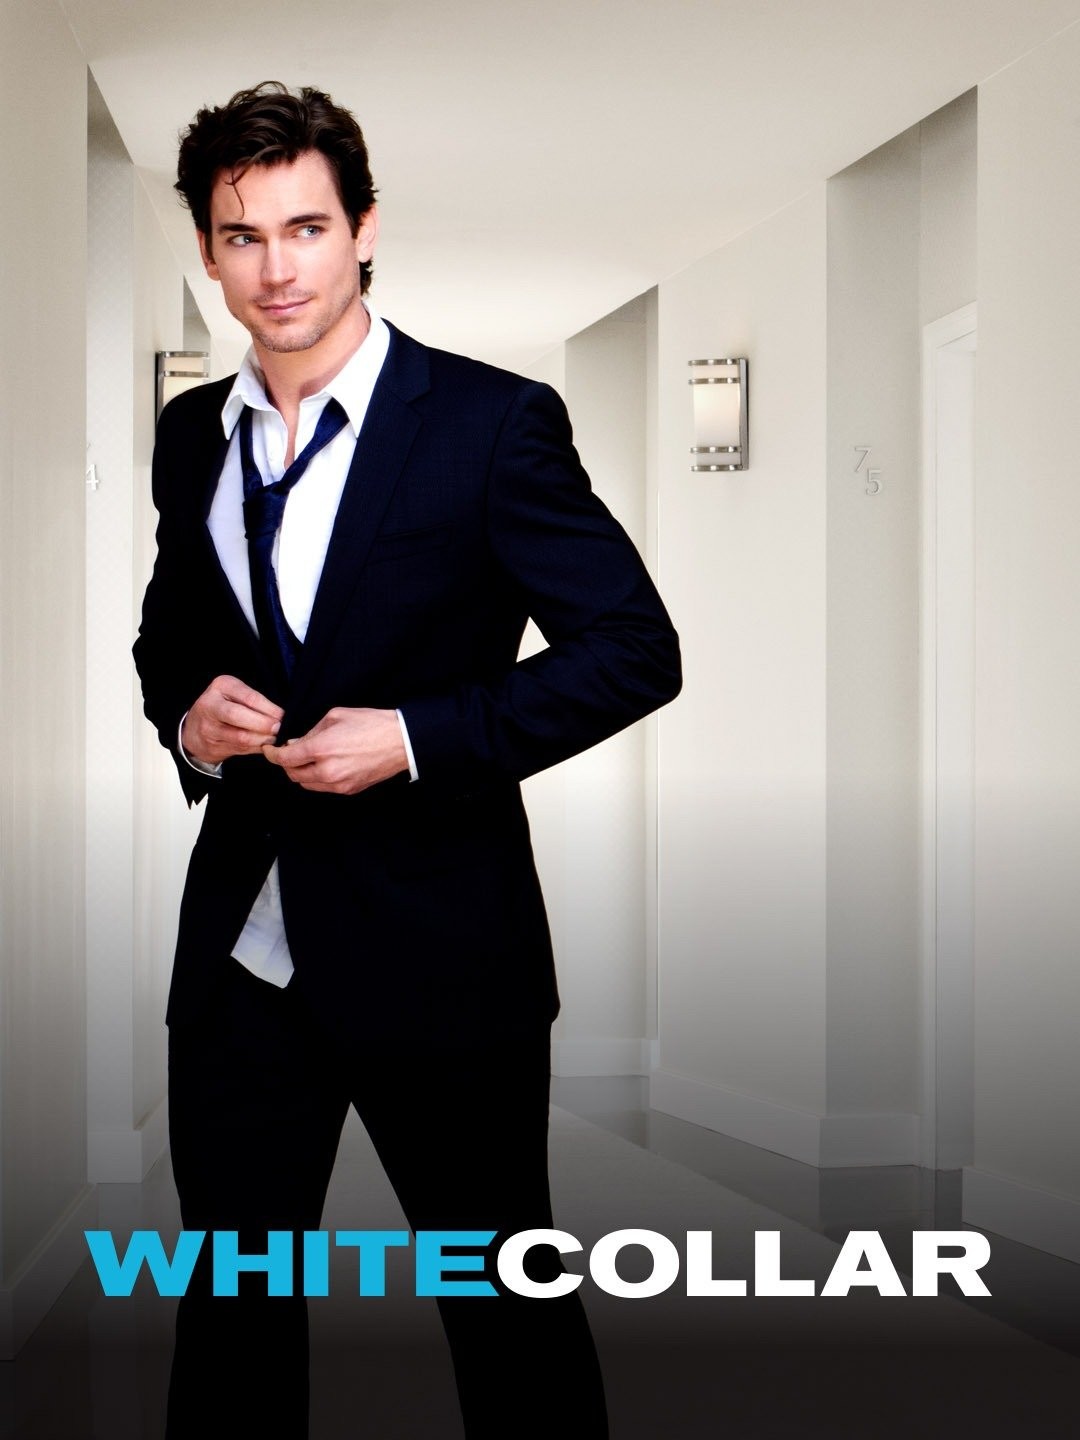 White Collar The Portrait (TV Episode 2009) - IMDb